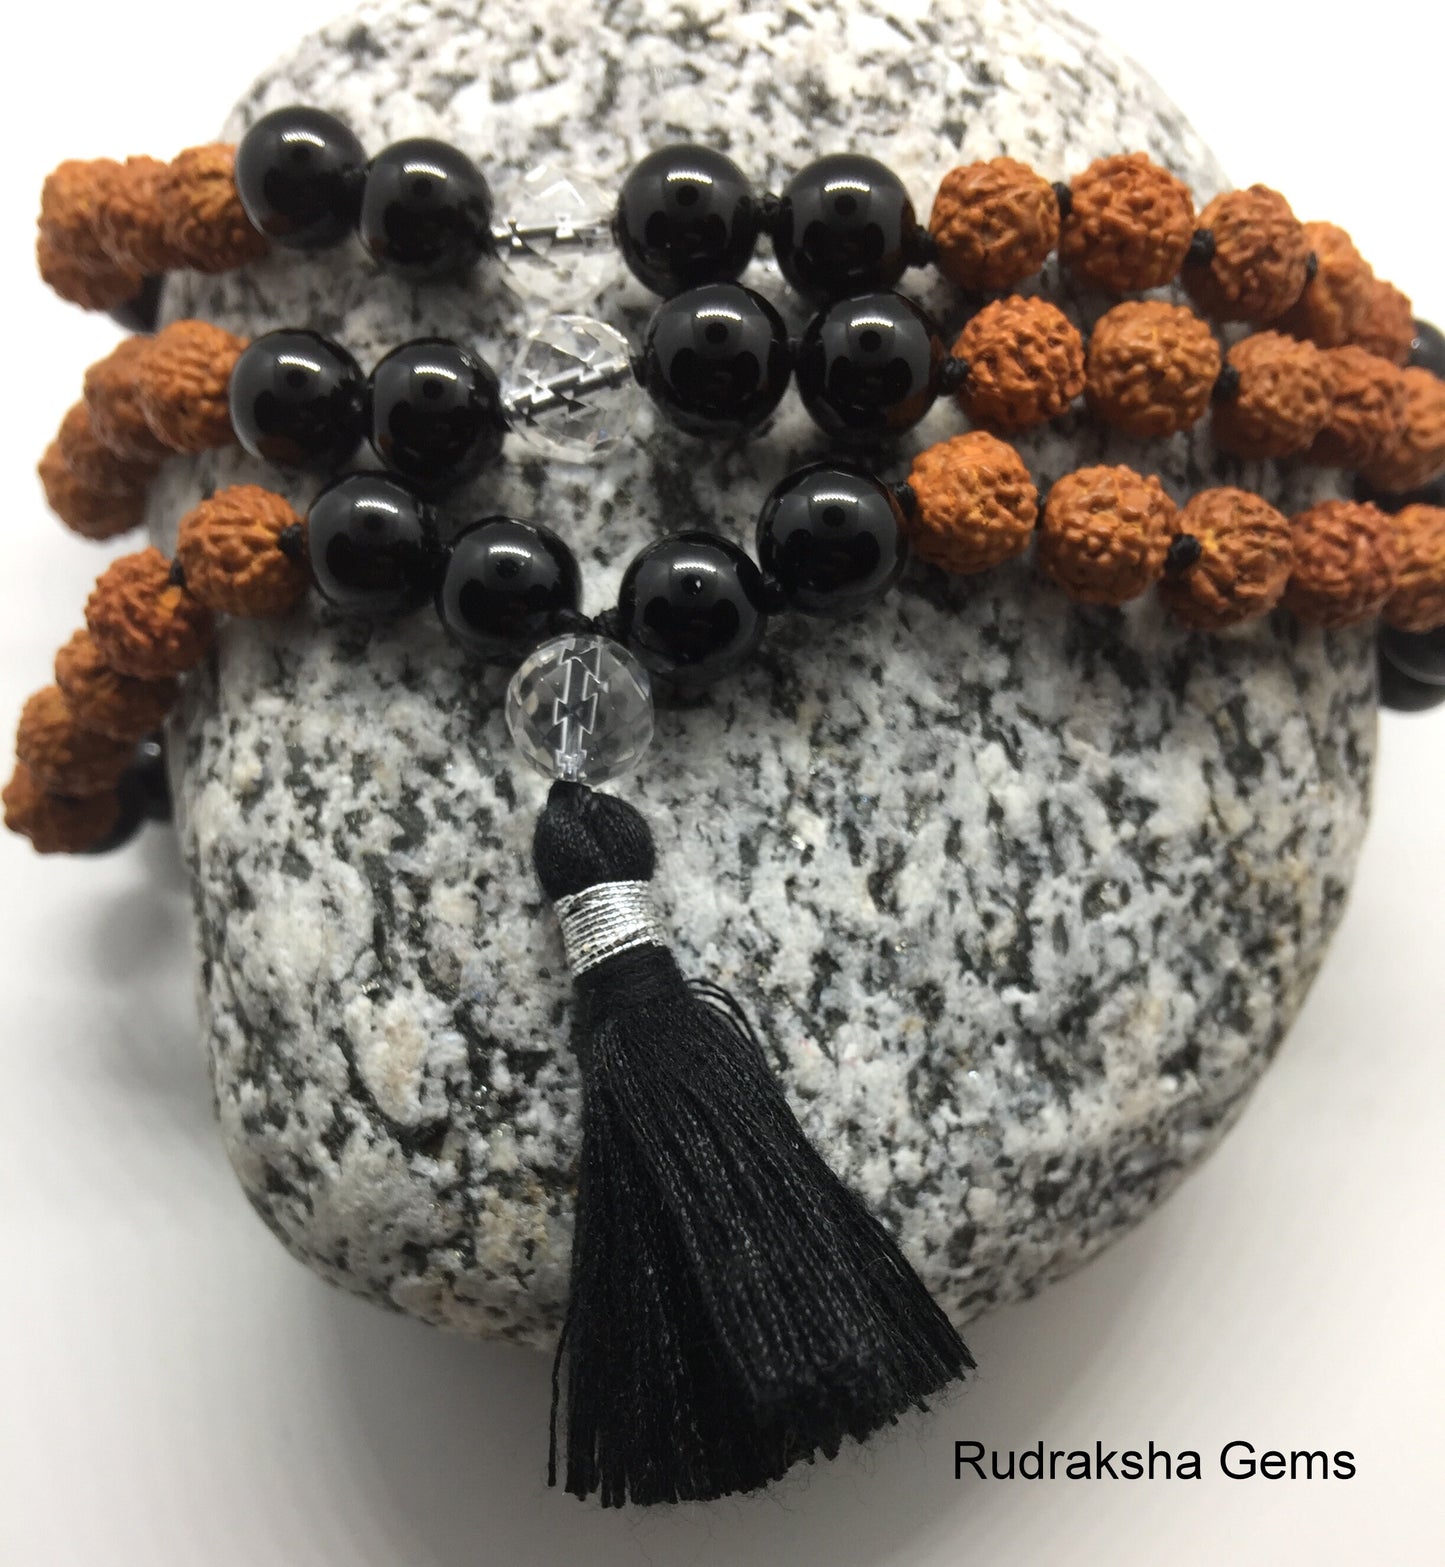 108 Rudraksha Mala Beaded Necklace, Mala Bead Necklace +Crystal Black Onyx Gemstones, Tibetan Buddhist Prayer Beads, Healing Meditation Yoga